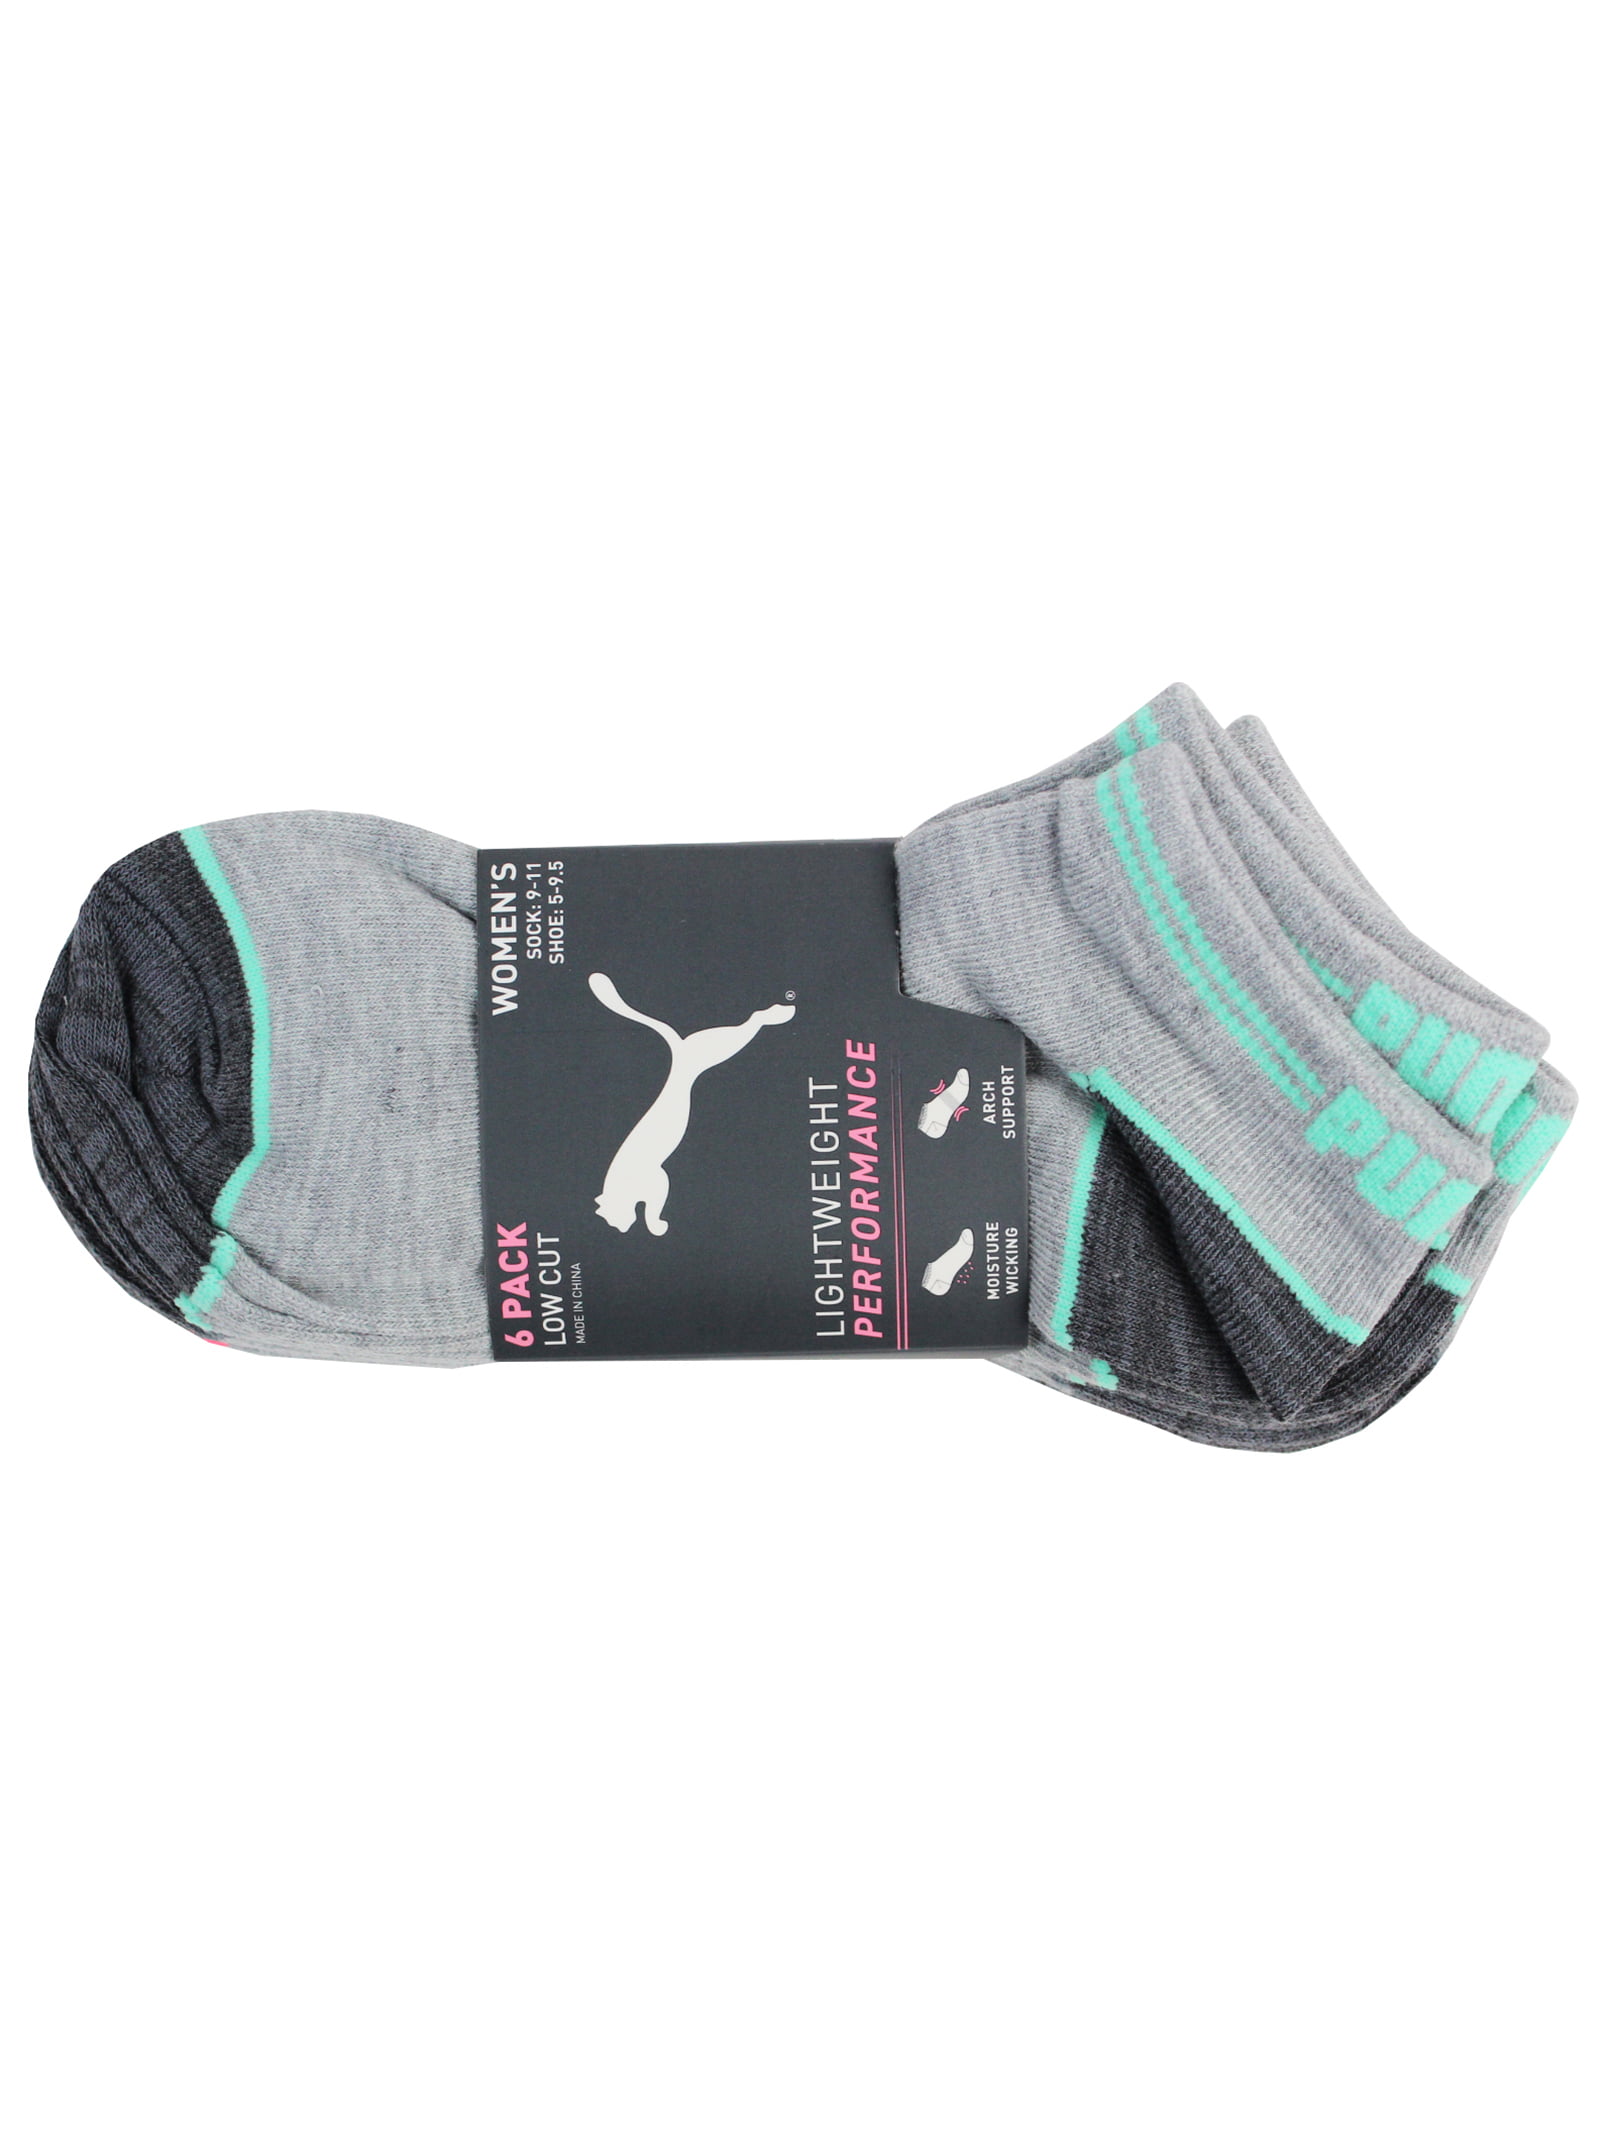 Puma Womens 6 Pack Low Cut Lightweight Performance Socks Size 9-11 Light  Grey Pink Teal - Walmart.com